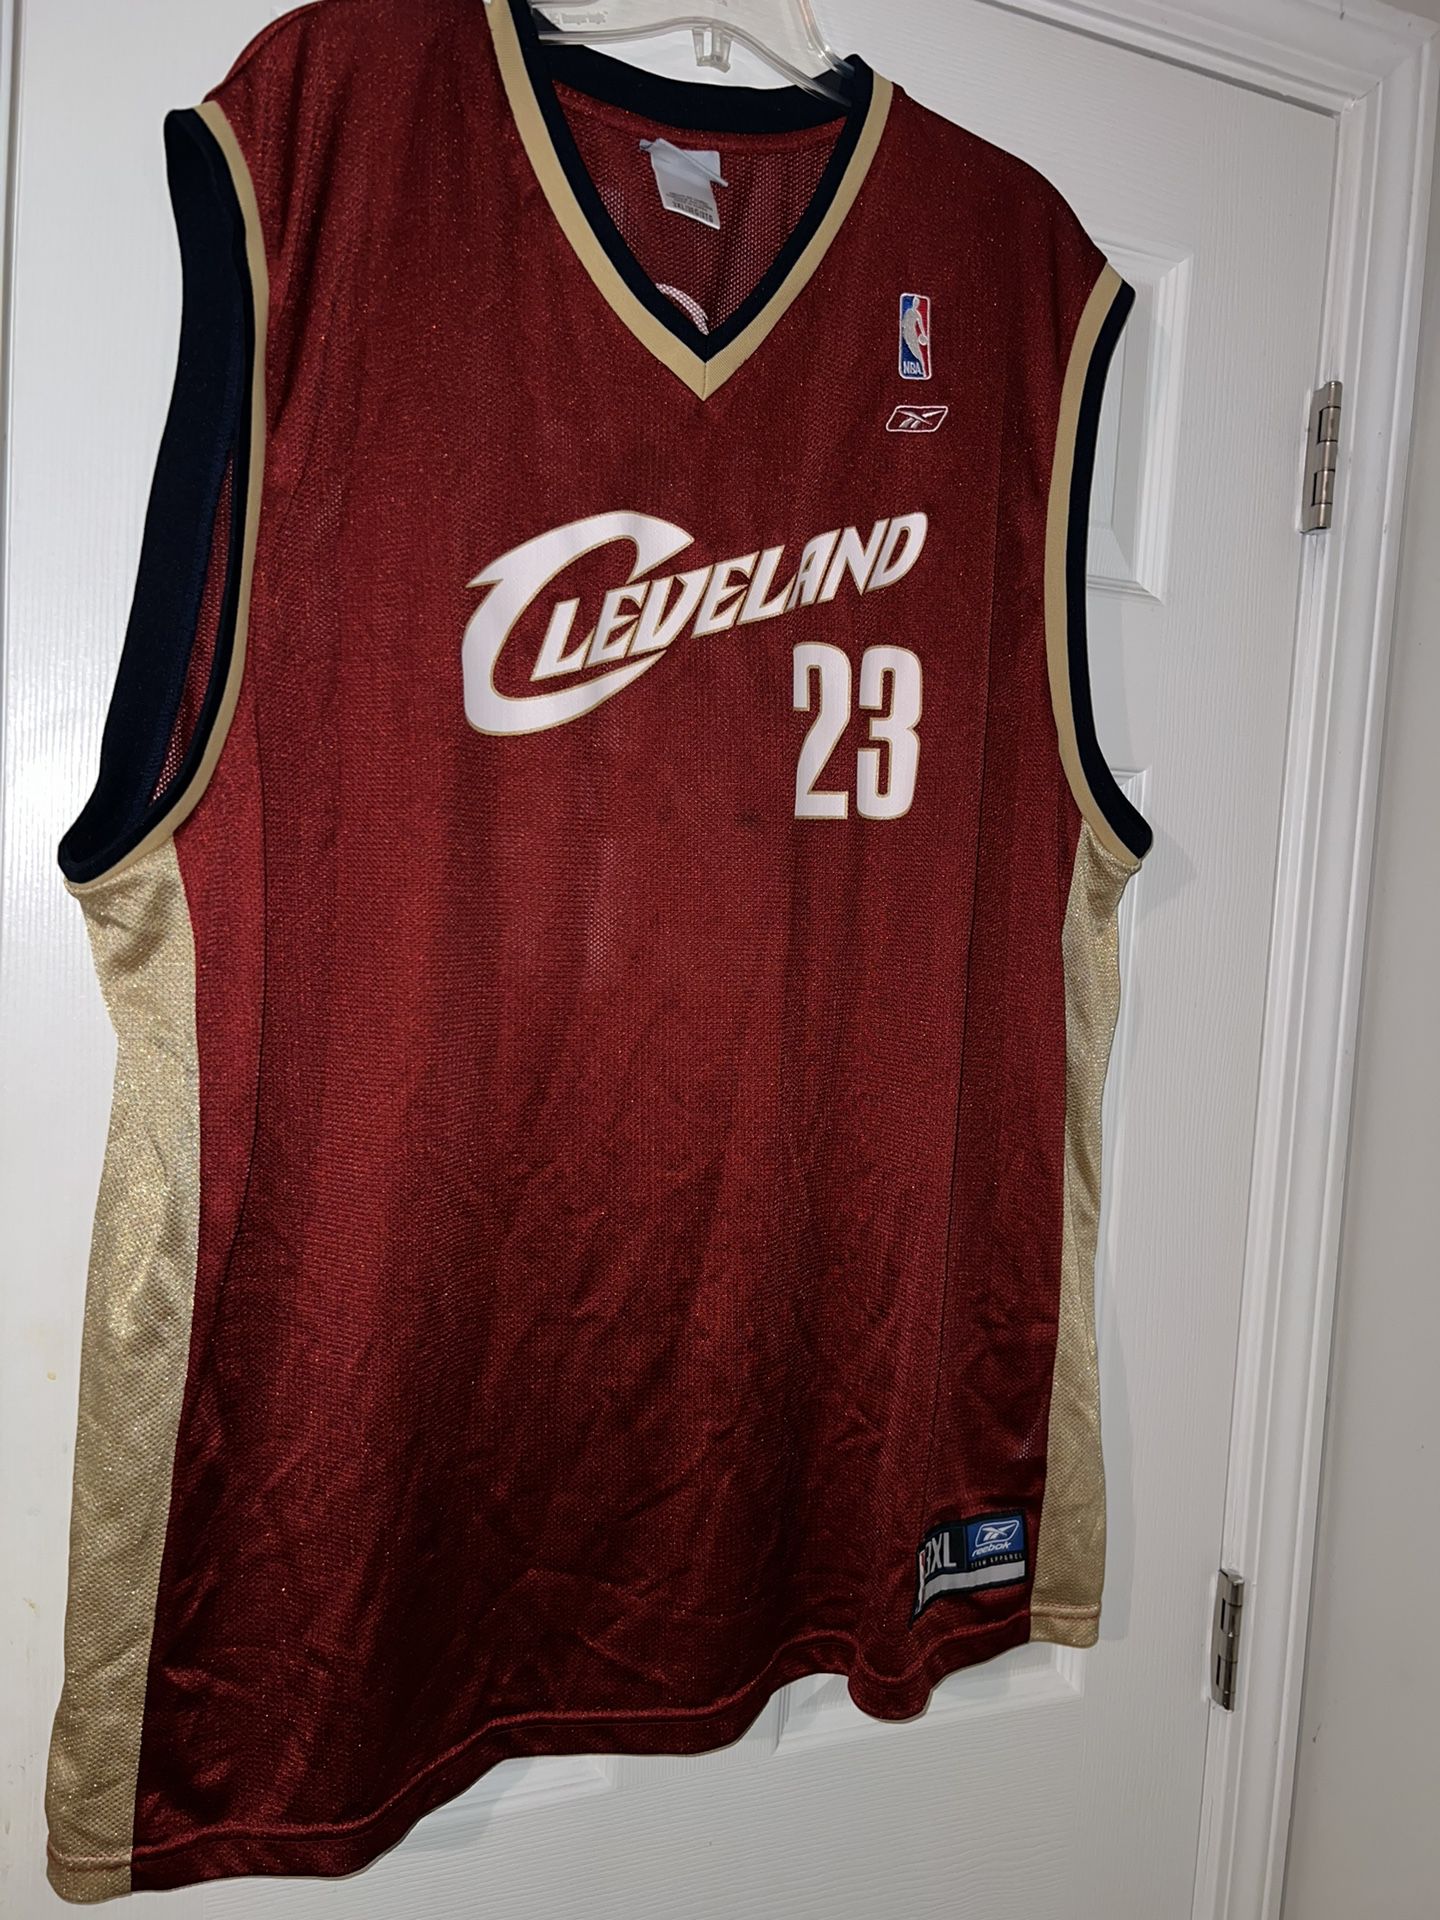 Reebok NBA Cavaliers LeBron James Jersey size 3XL